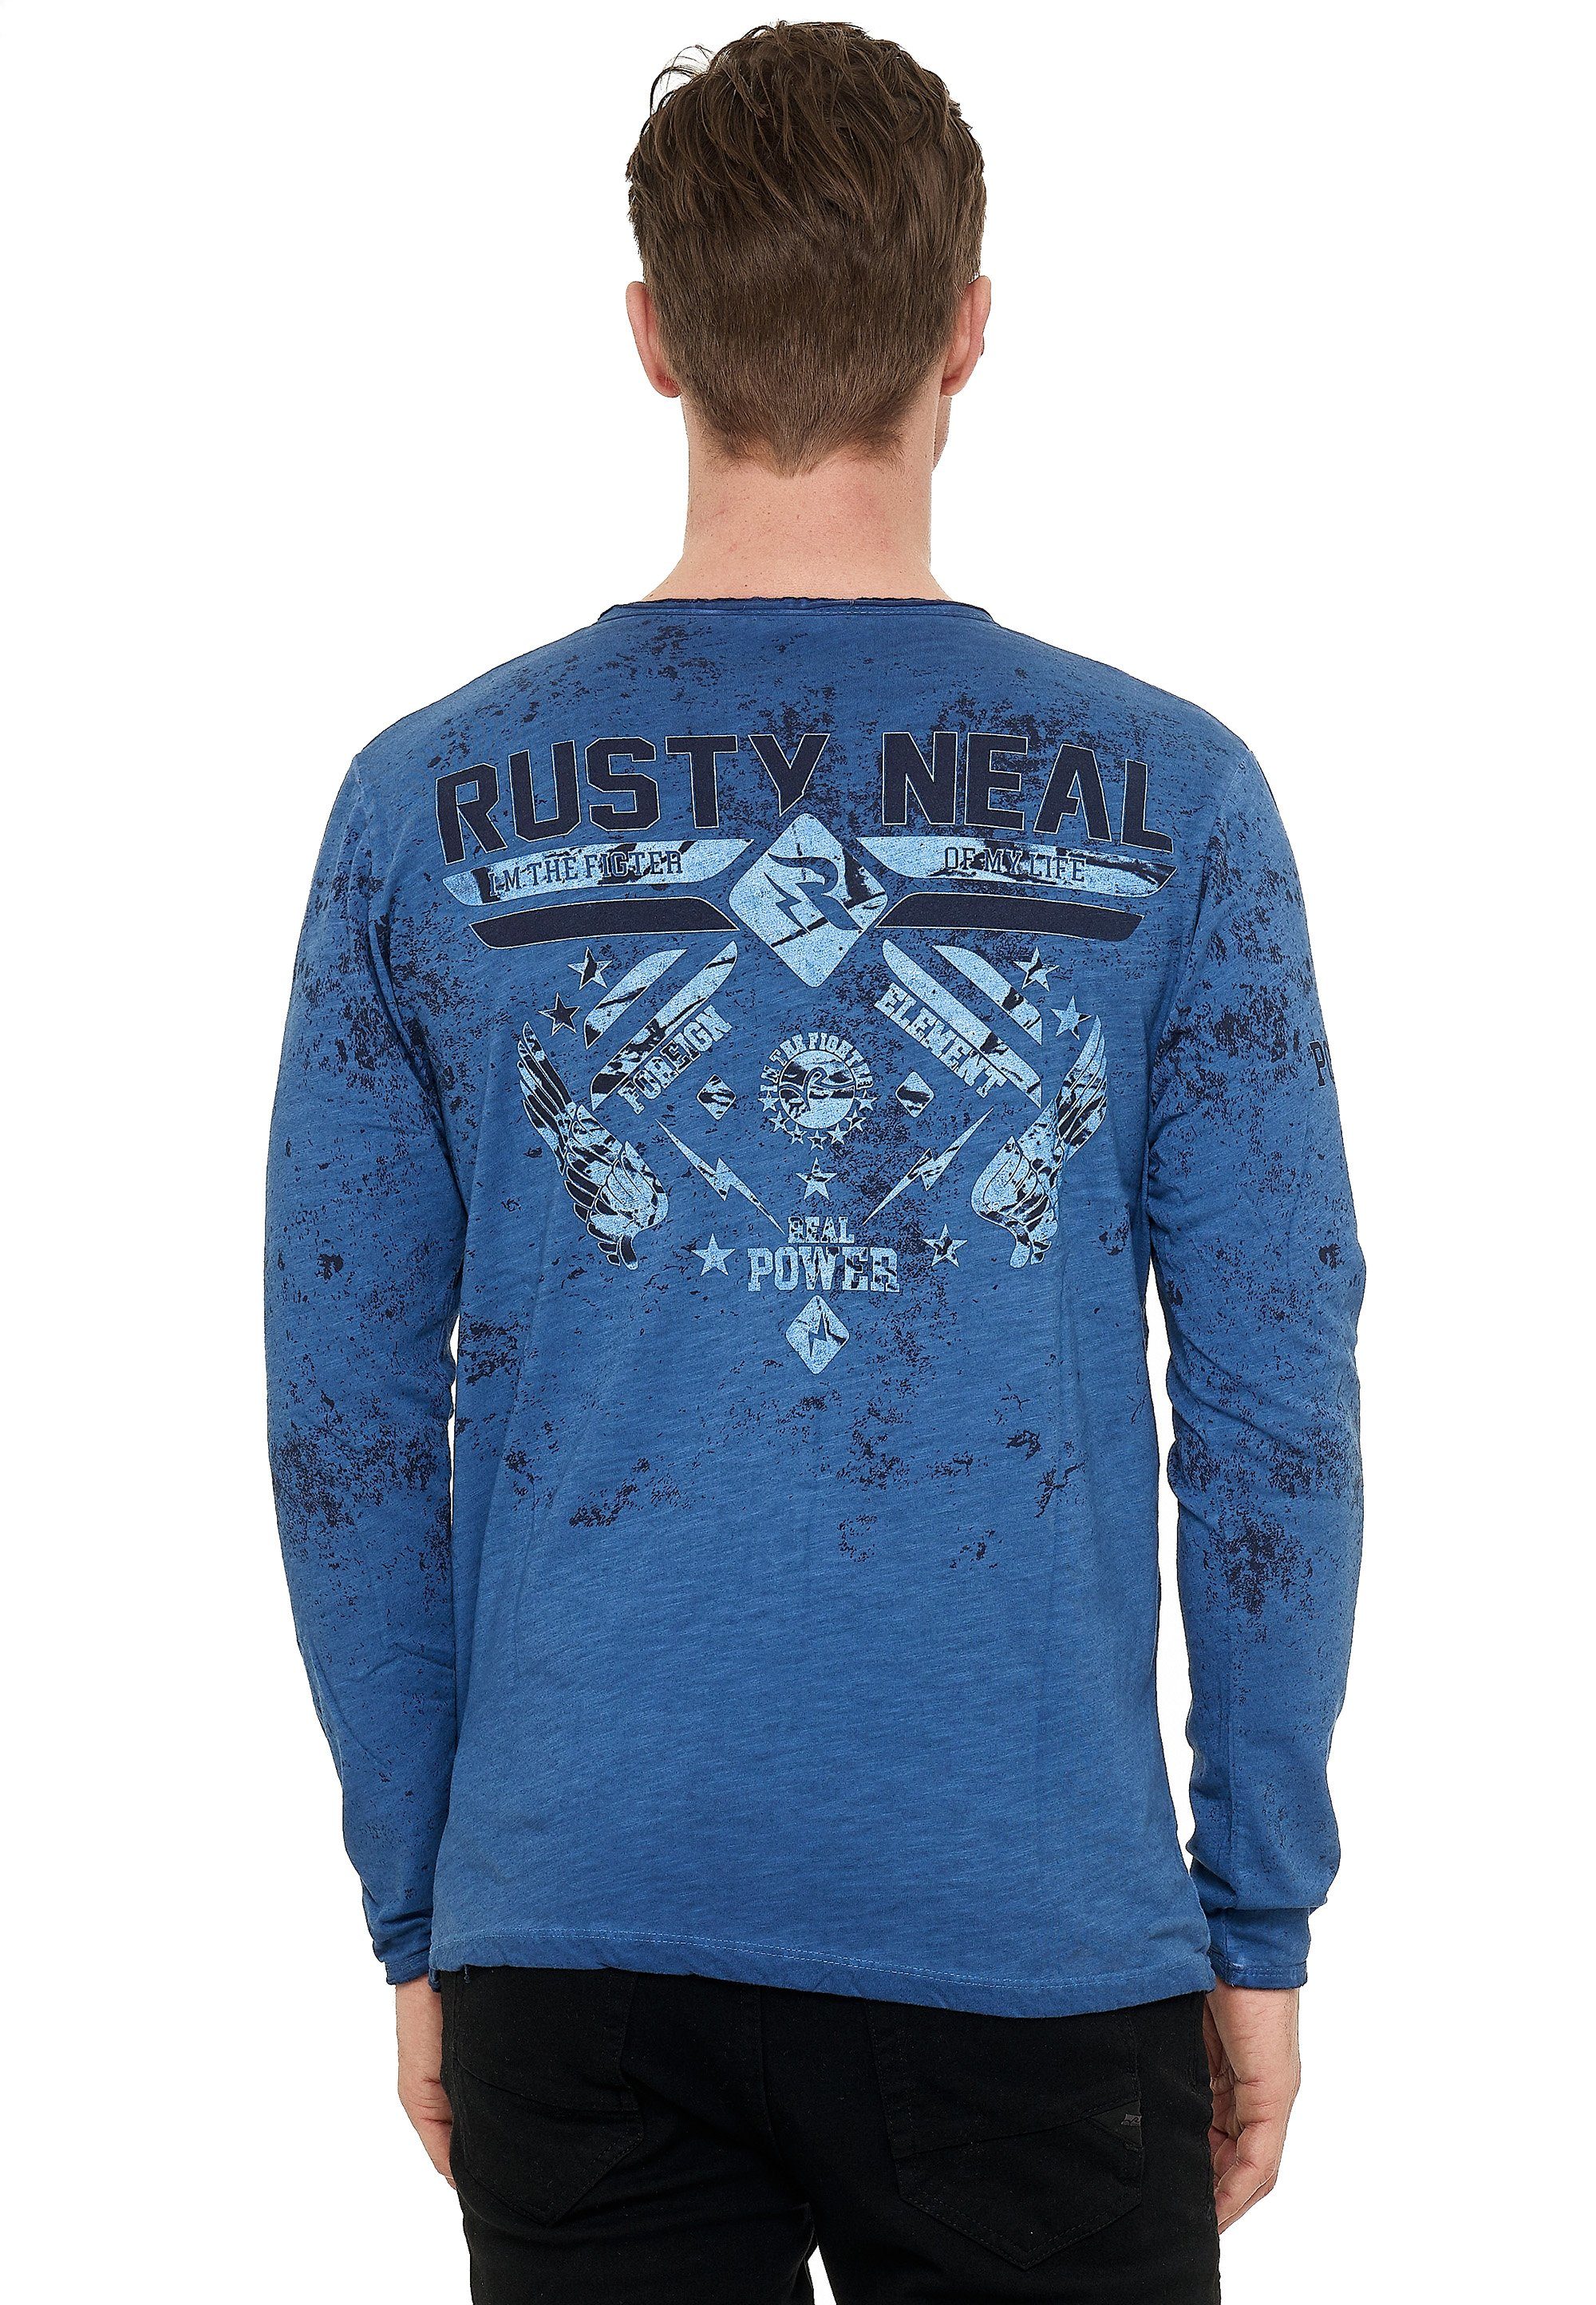 Herren Shirts Rusty Neal Langarmshirt mit hochwertigem Print